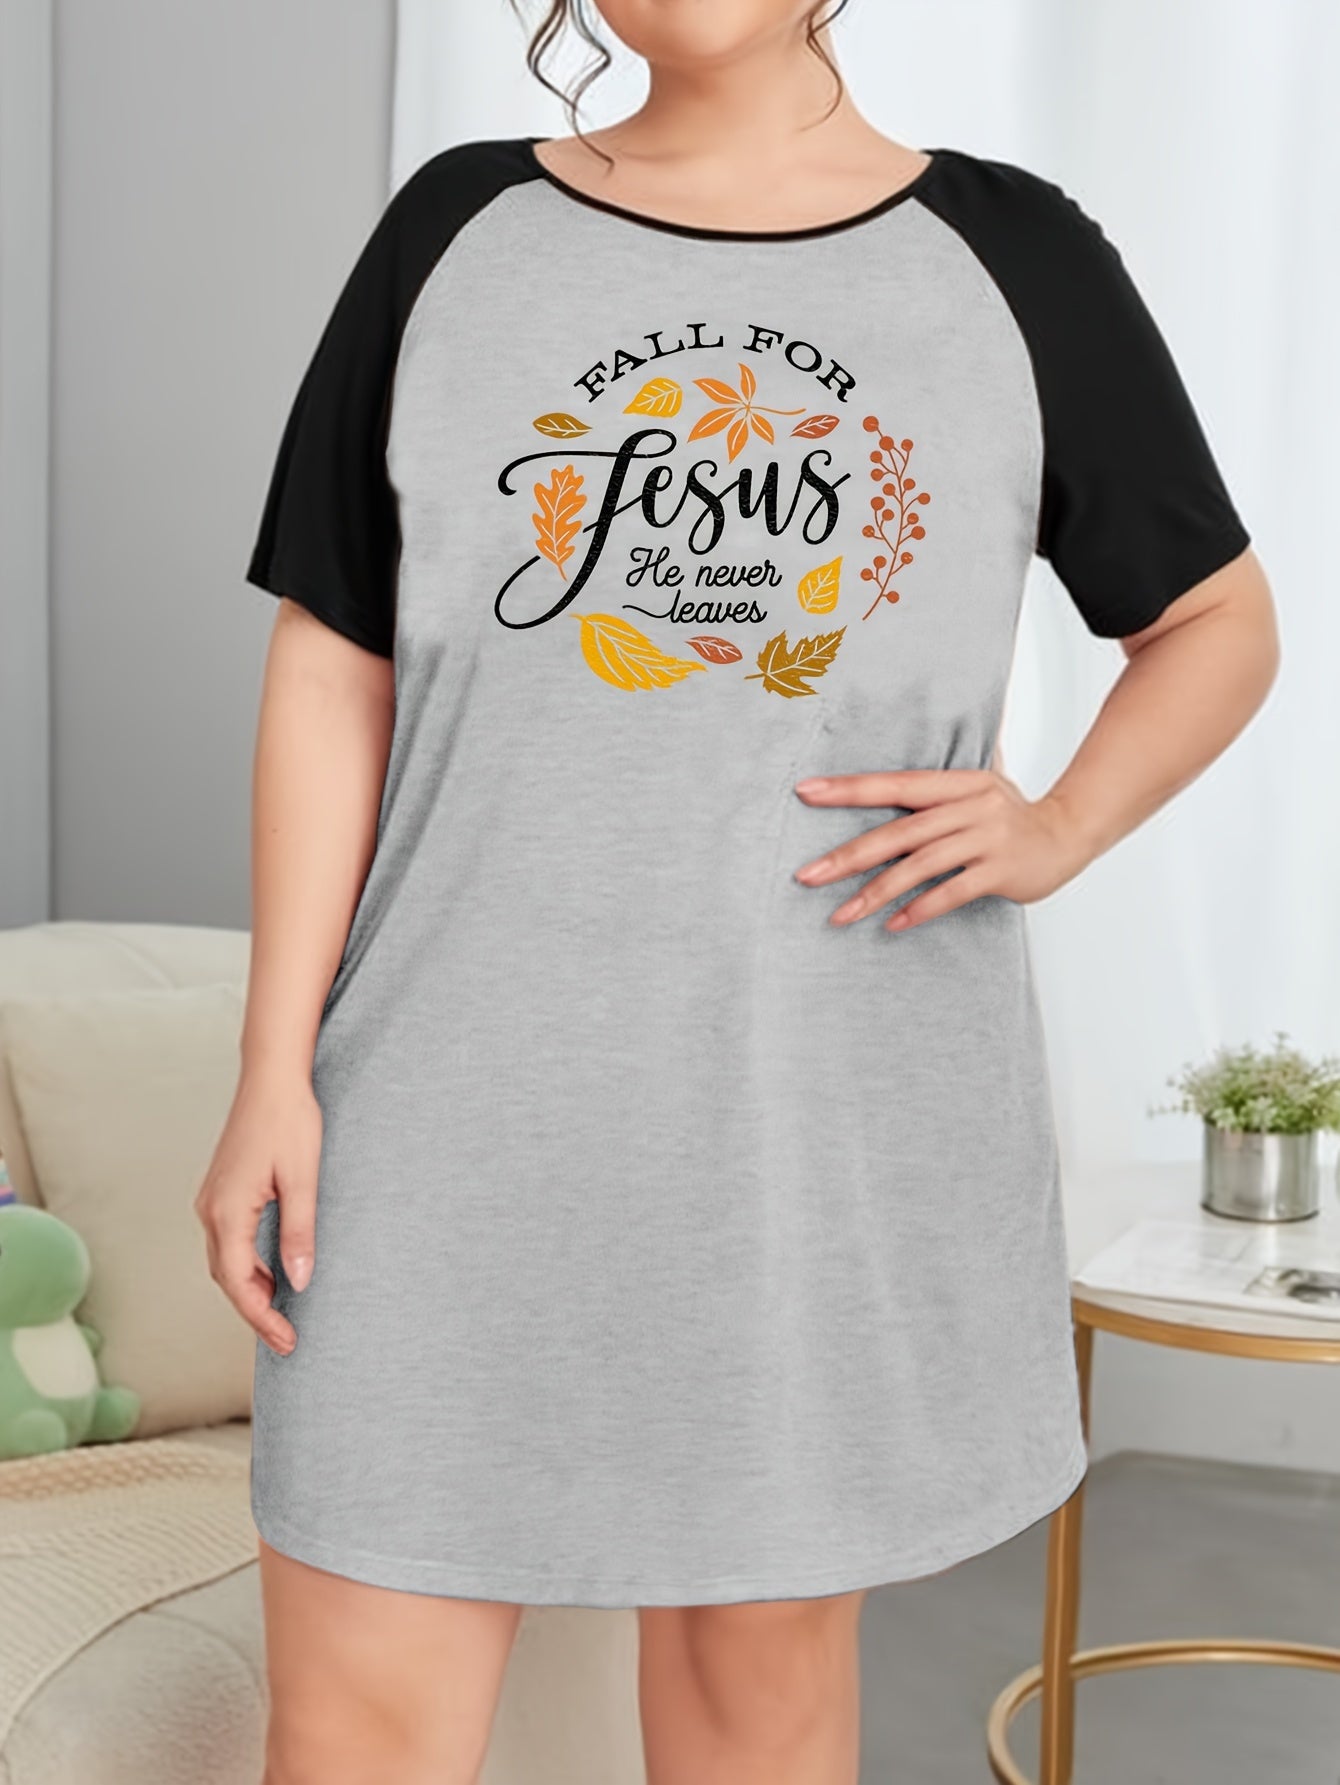 Fall For Jesus He Never Leaves Plus Size Women's Christian Pajamas claimedbygoddesigns